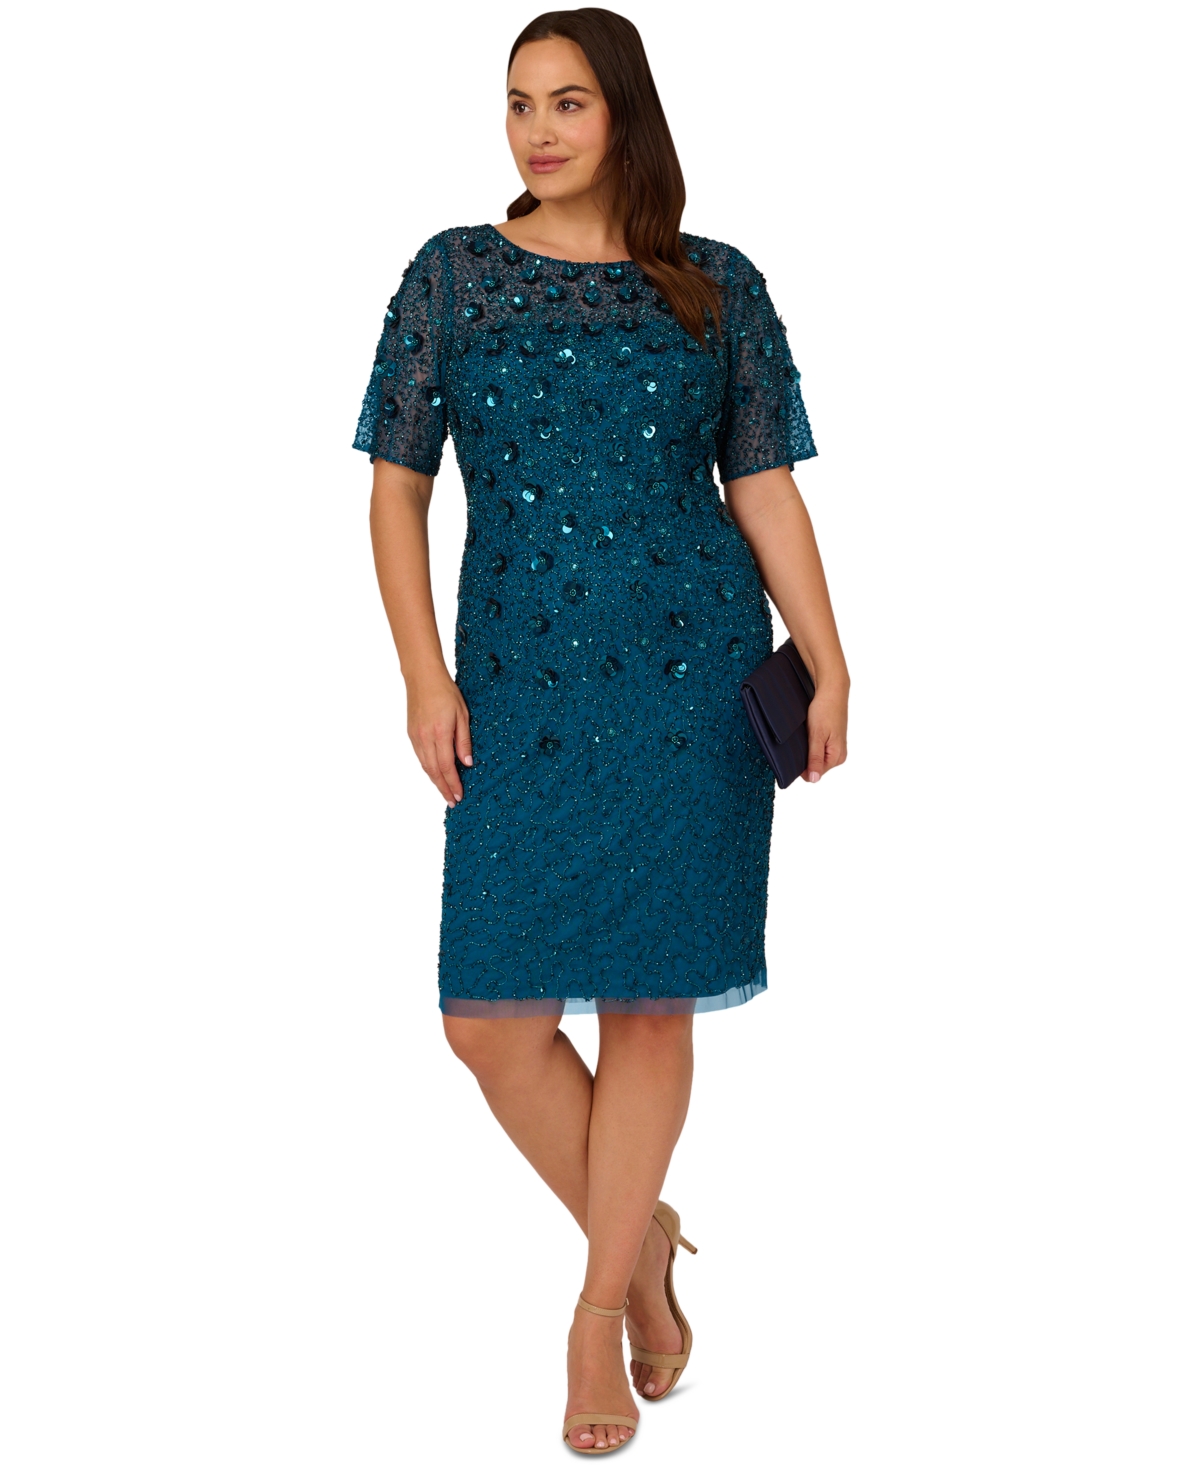 Plus Size Embellished Sheath Dress - Teal Saphire